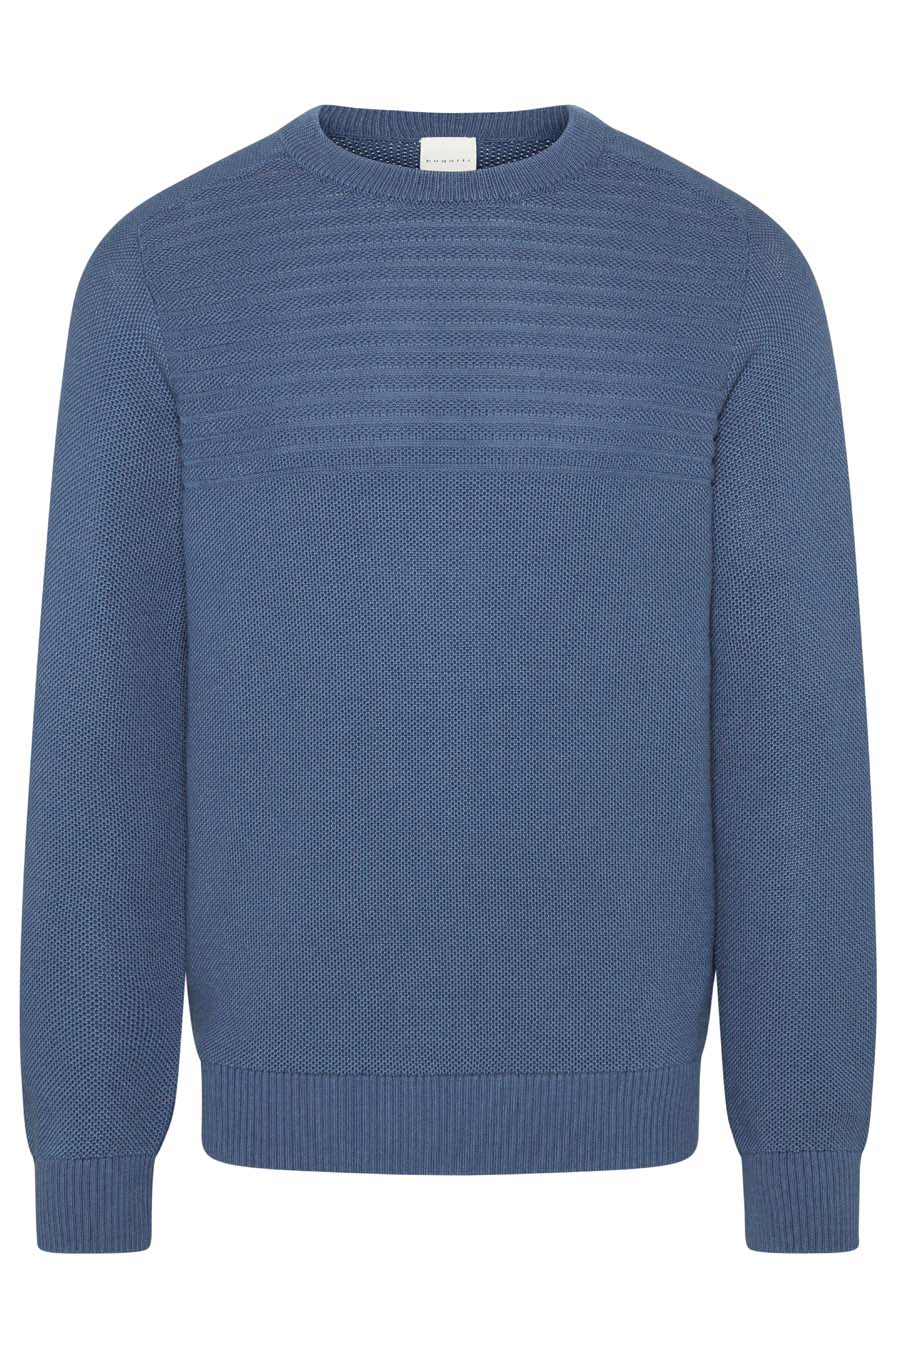 BUGATTI Mens Long Sleeve Sweater BLUE